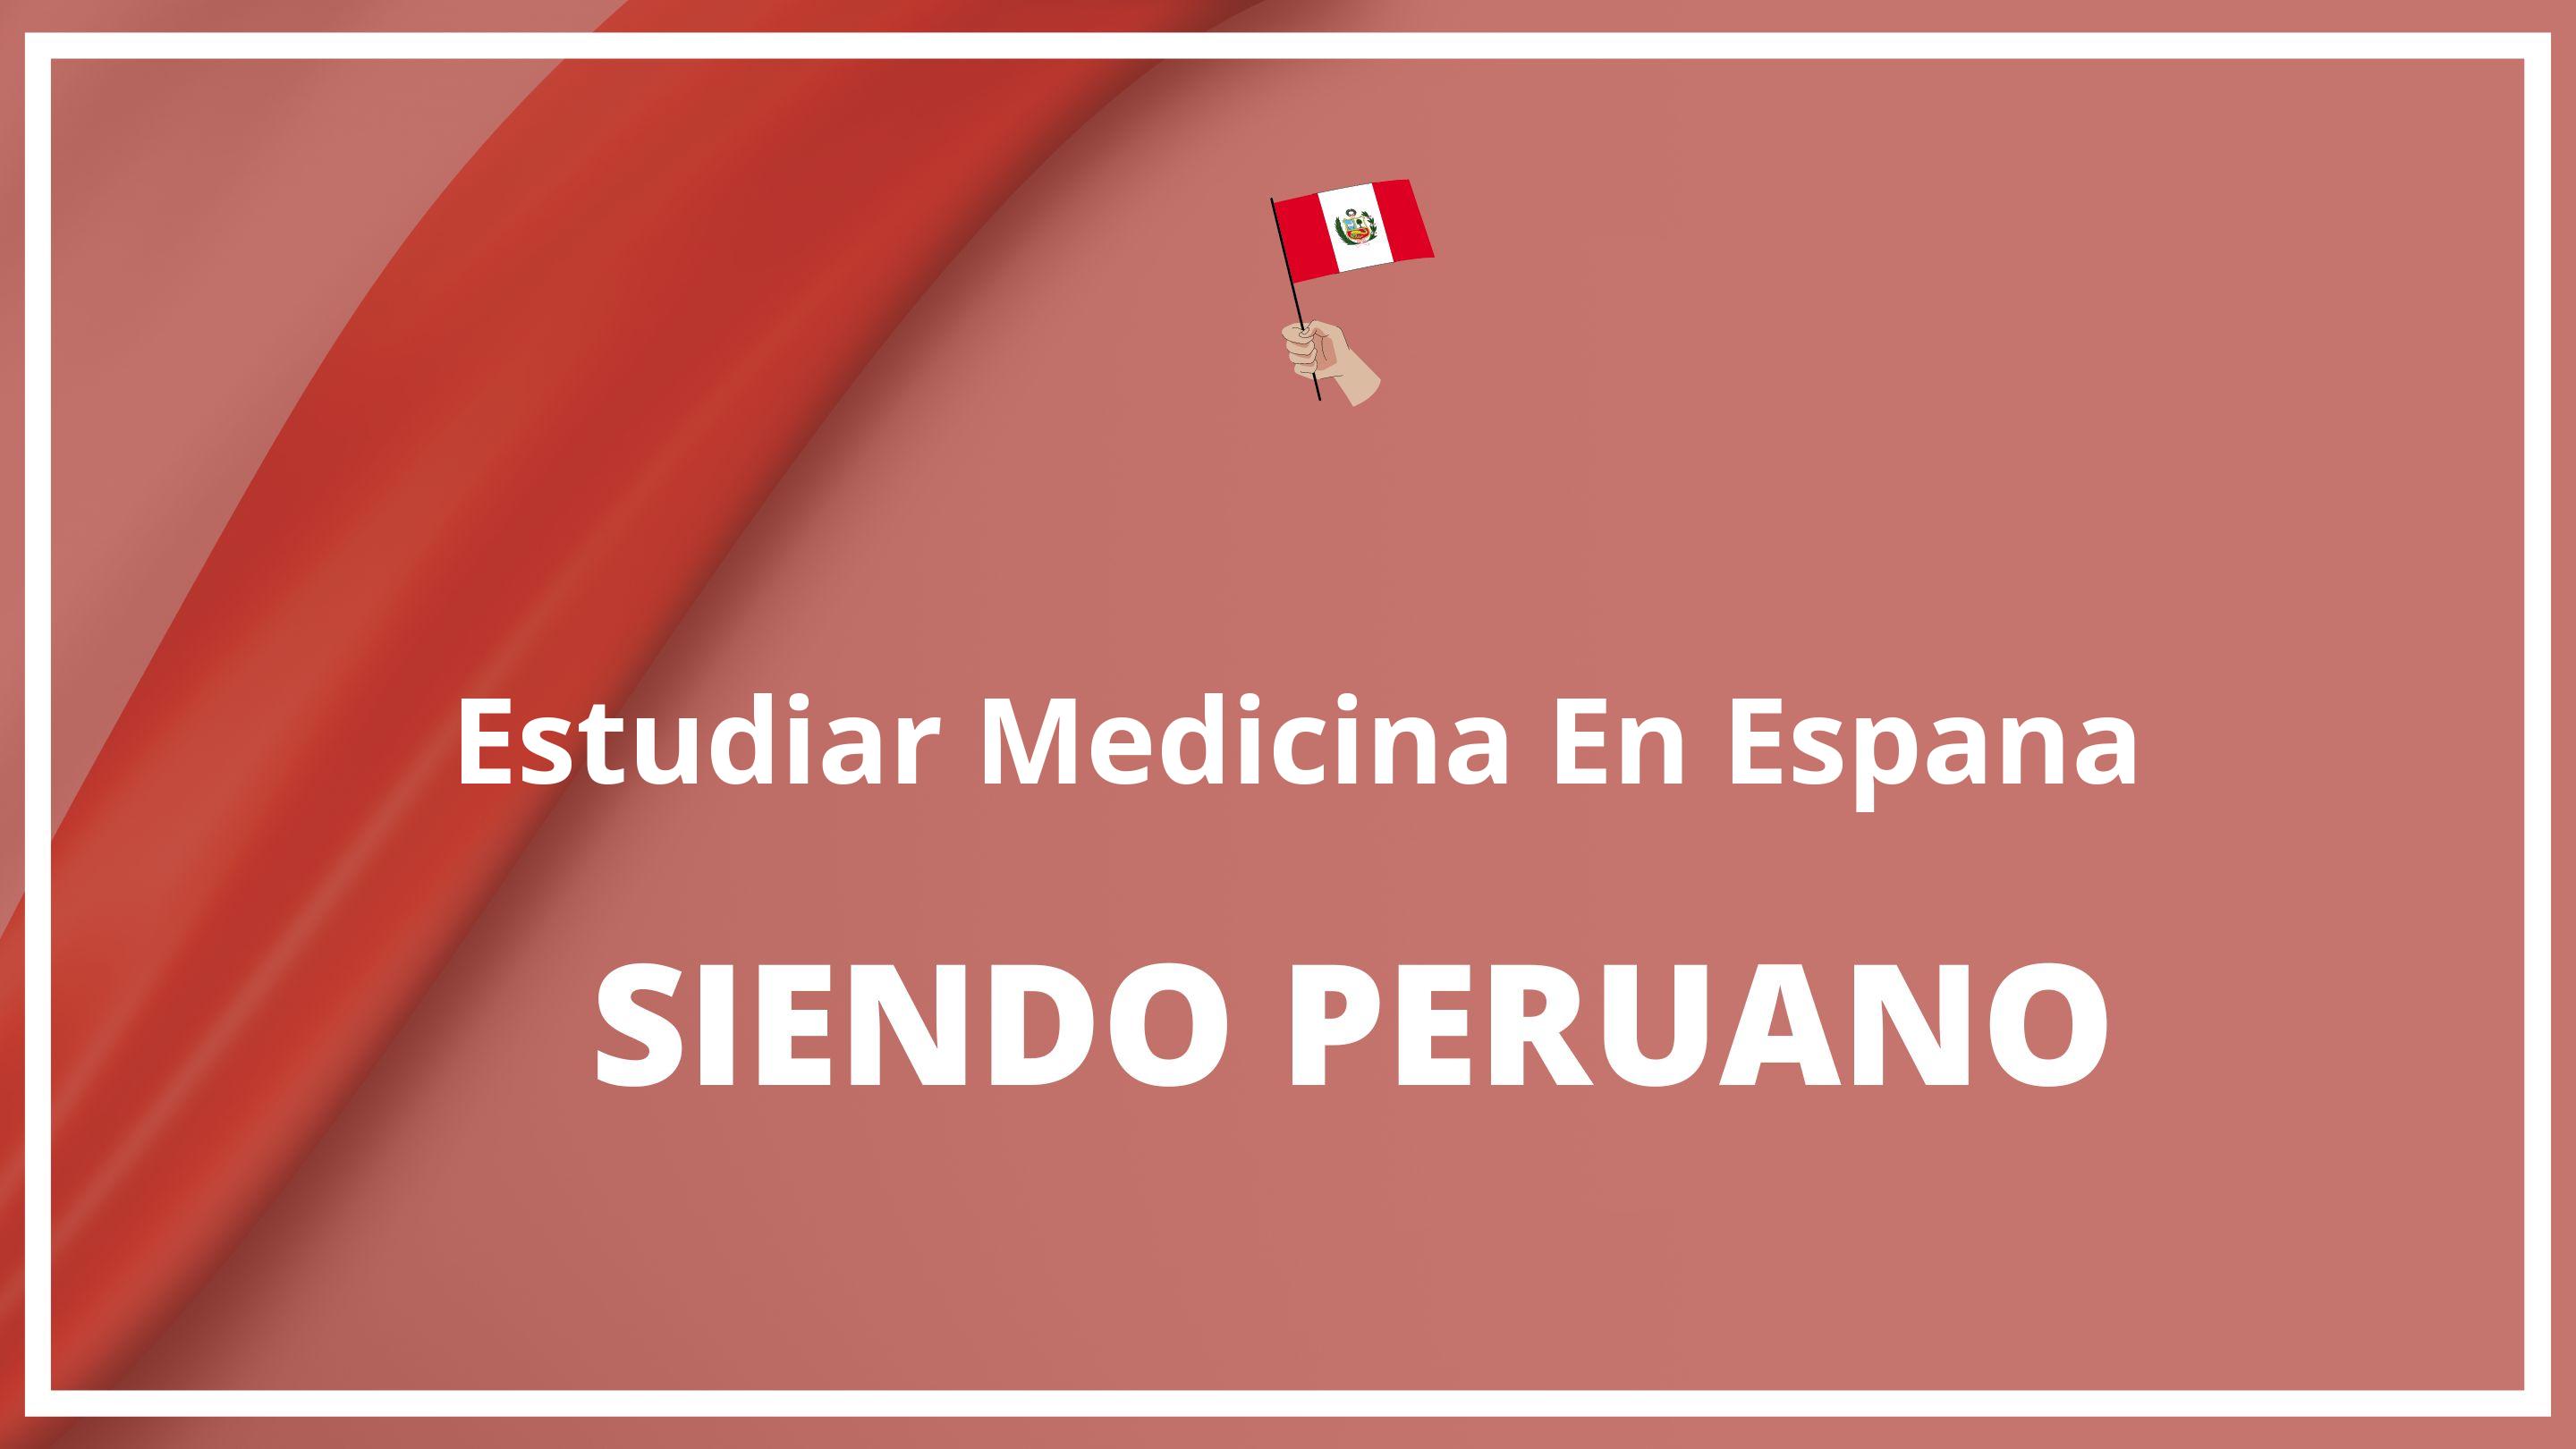 Como estudiar medicina en españa siendo peruano